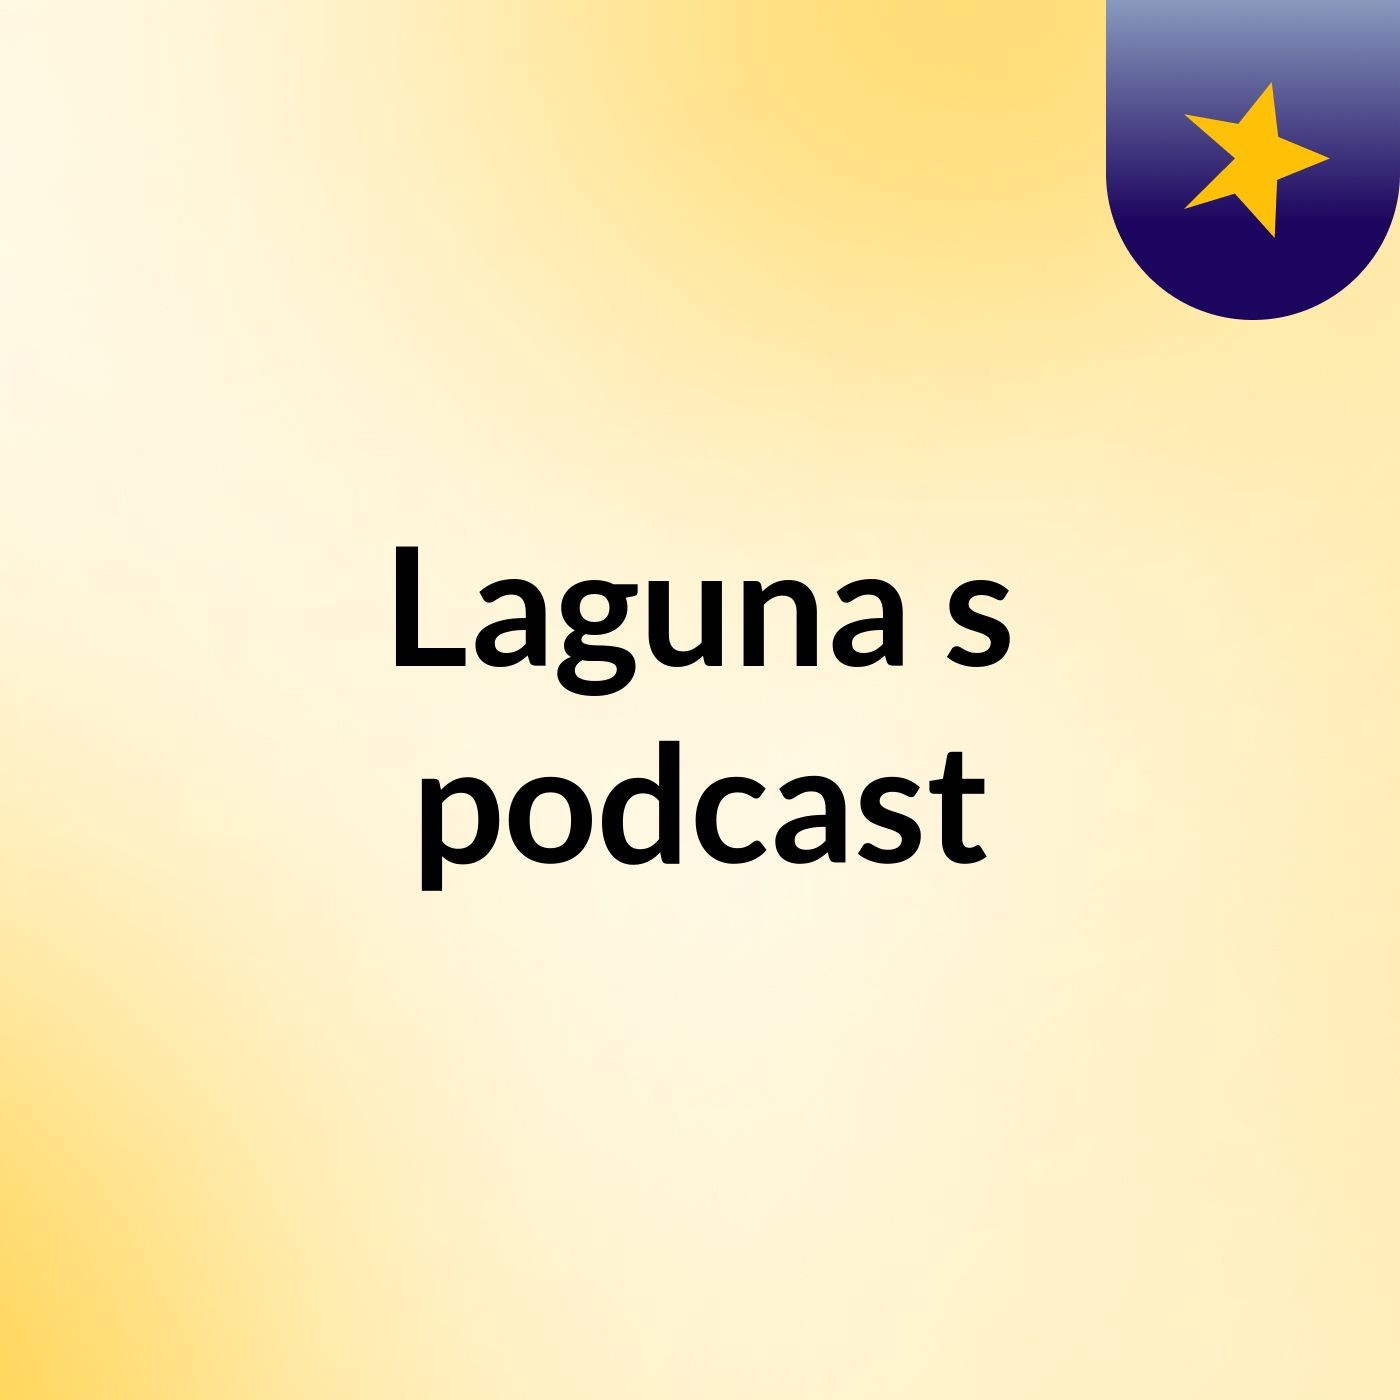 Laguna's podcast